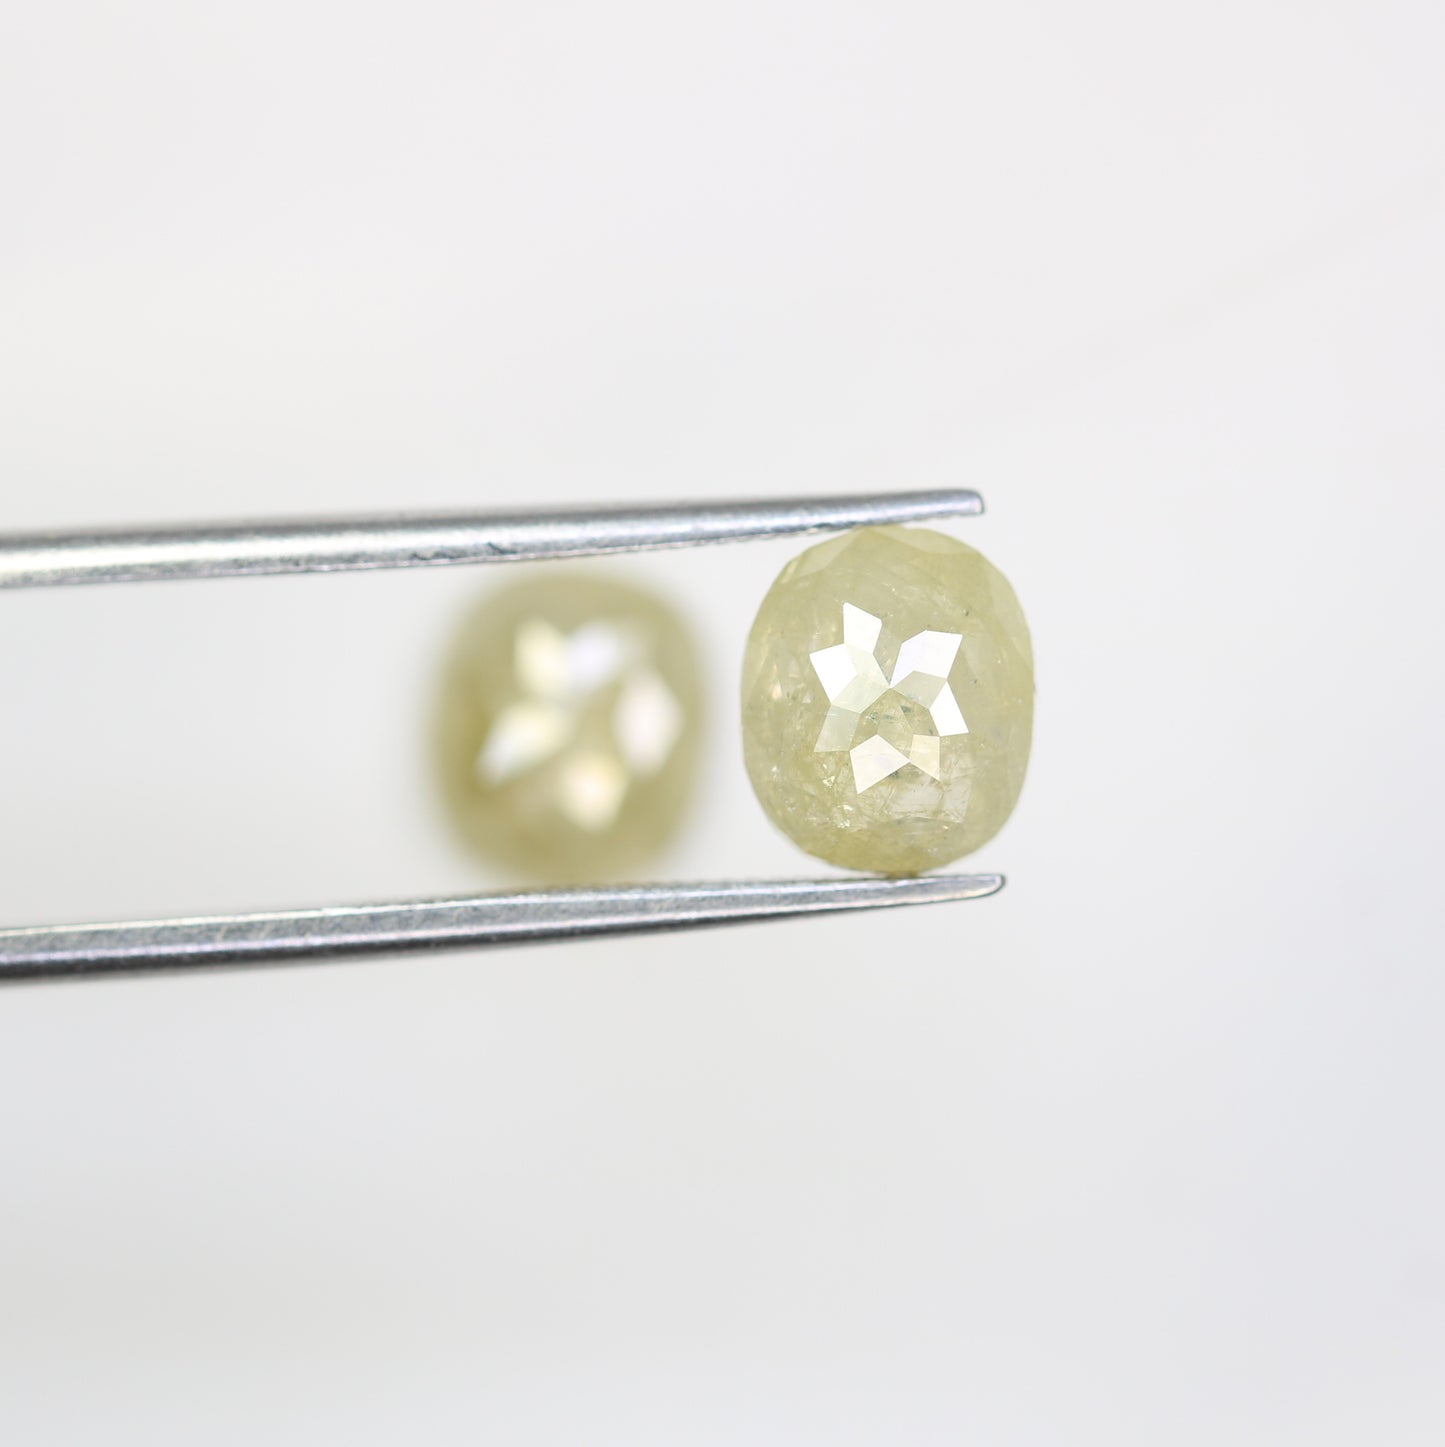 3.19 Carat Natural Green Rustic Light Green Oval Cut Diamond Pair For Diamond Earring